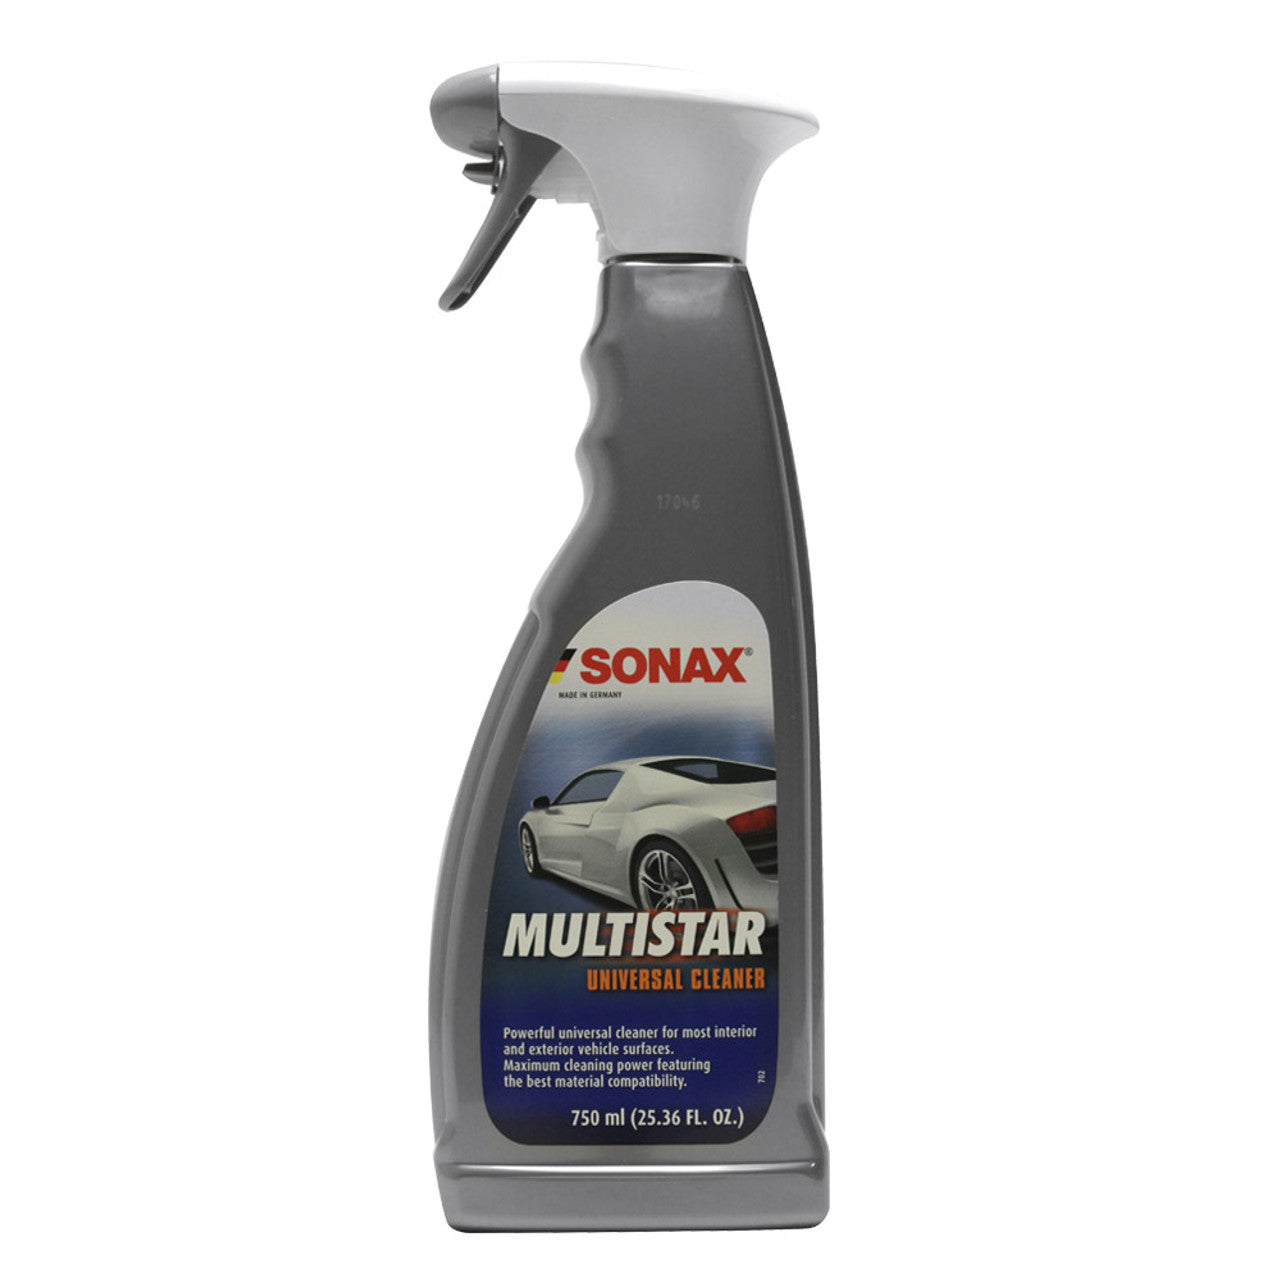 Sonax Multistar U Cleaner